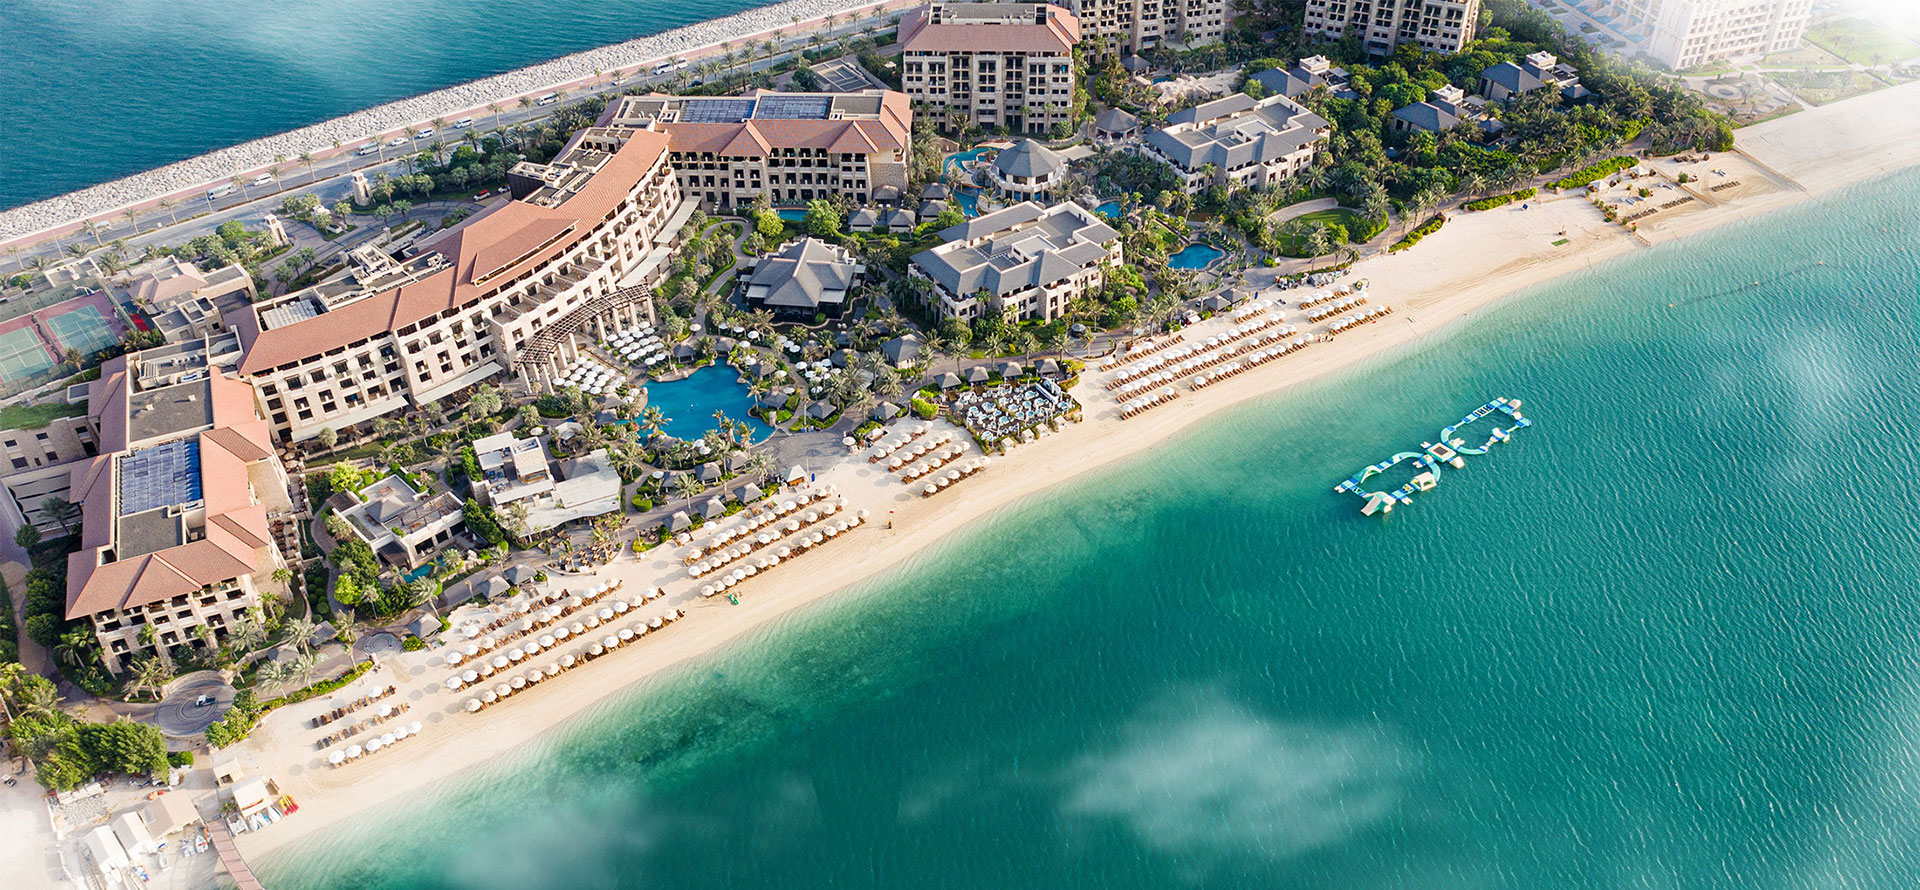 Top view of Dubai All-Inclusive Resorts.